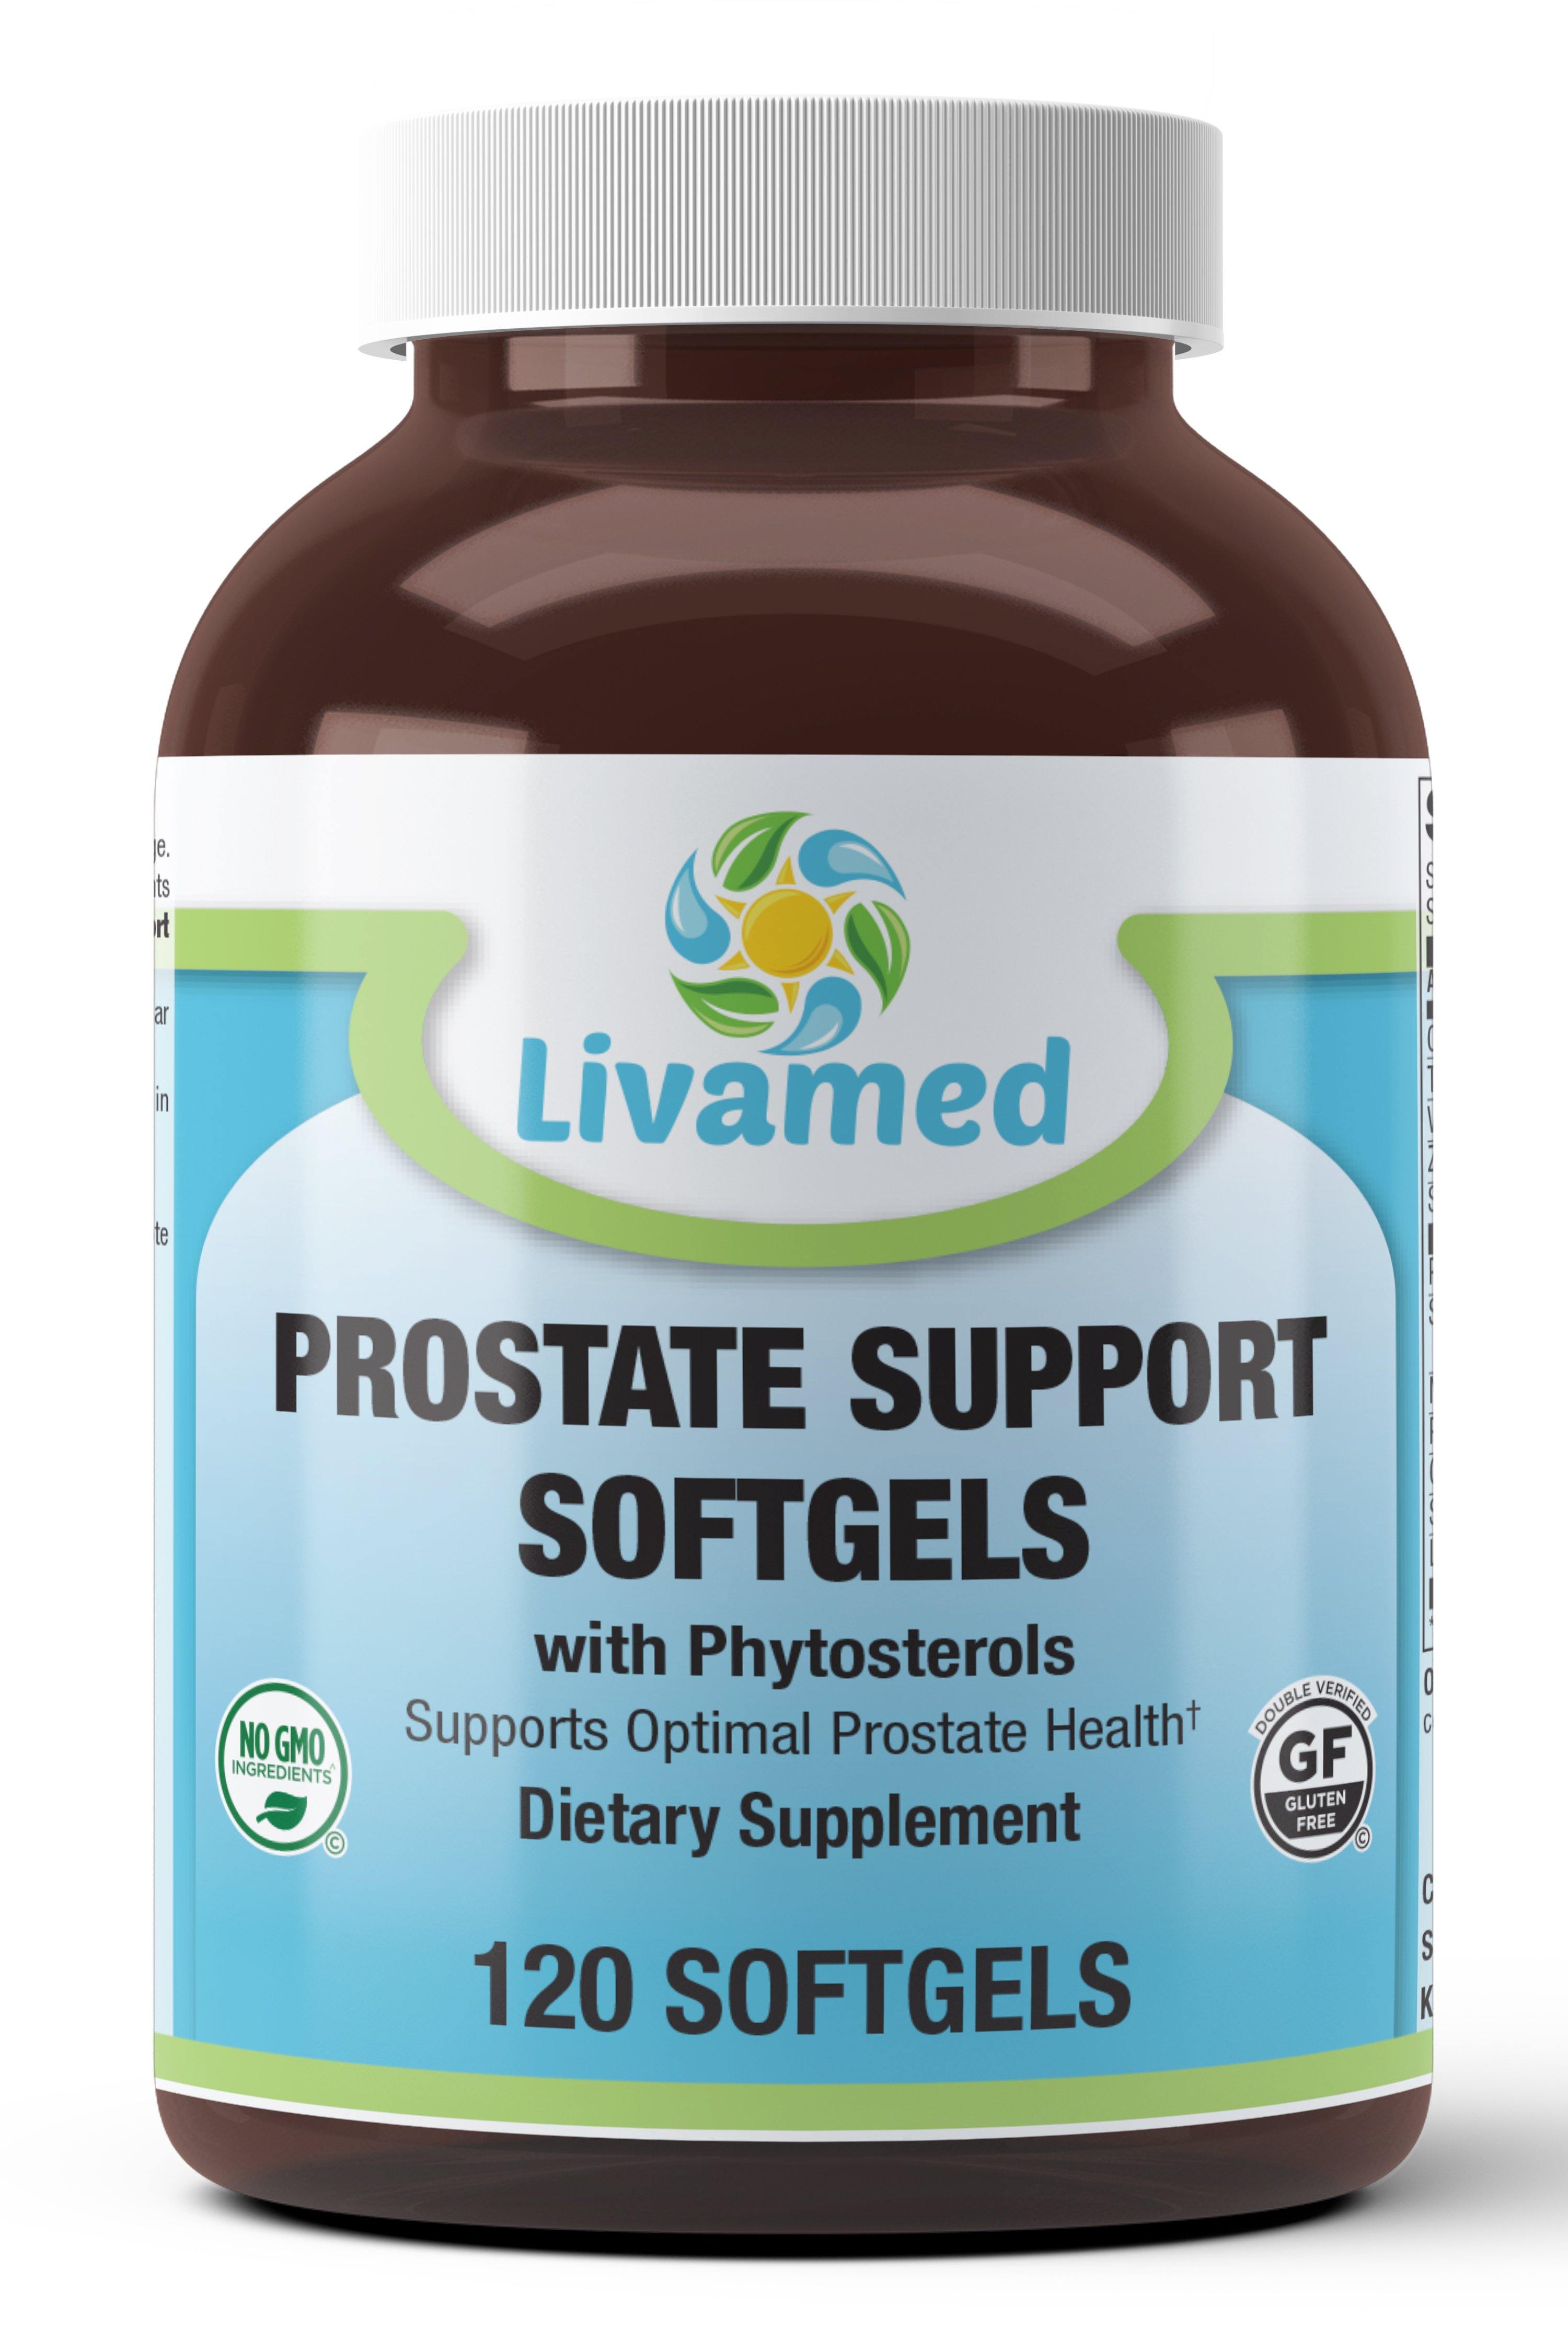 Livamed - Prostate Support Softgels with Phytosterols 120 Count - Livamed Vitamins